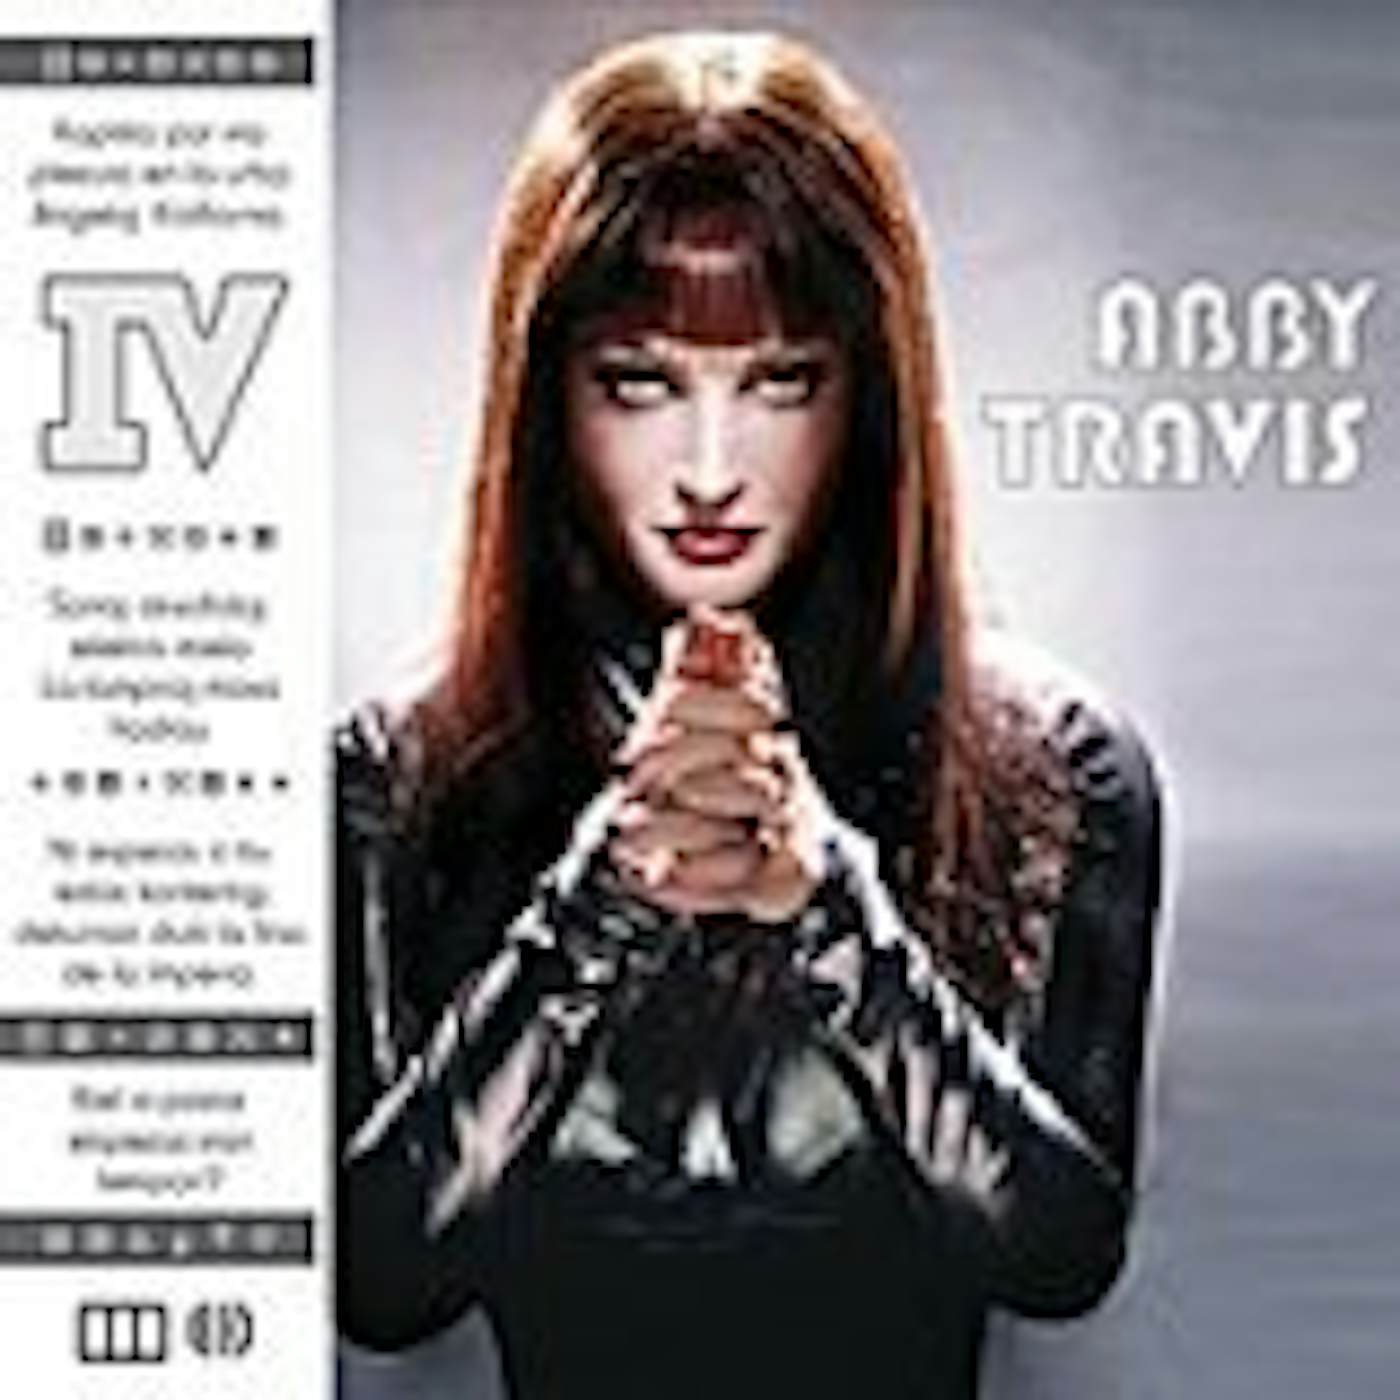 ABBY TRAVIS IV Vinyl Record